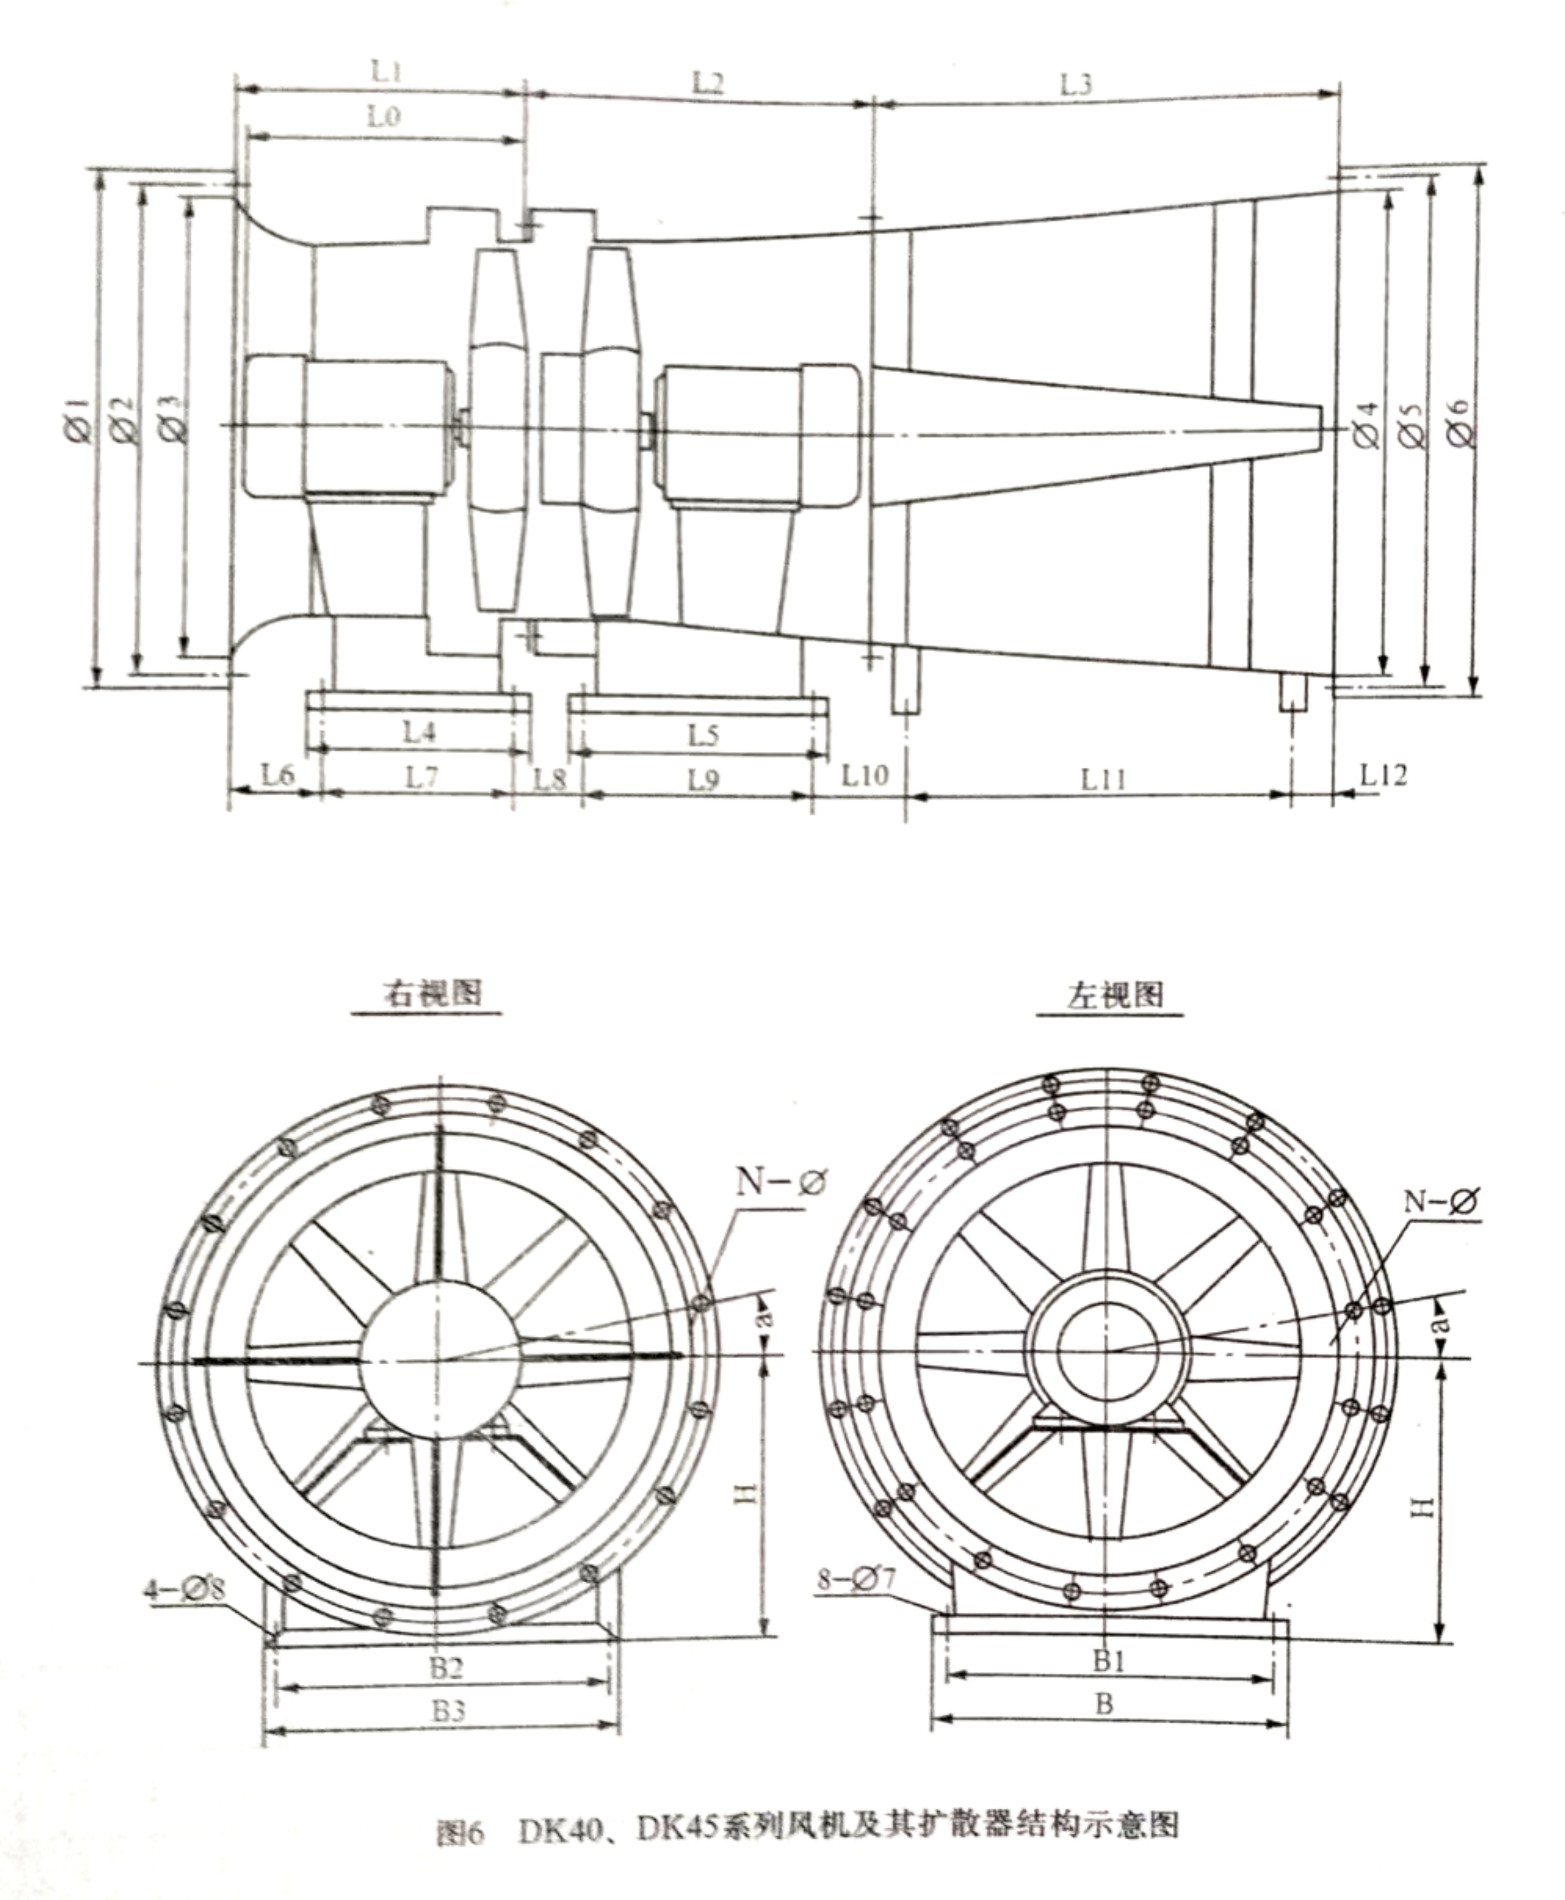 P12-图6 K40、K45系列风机及其扩散器结构示意图.jpg